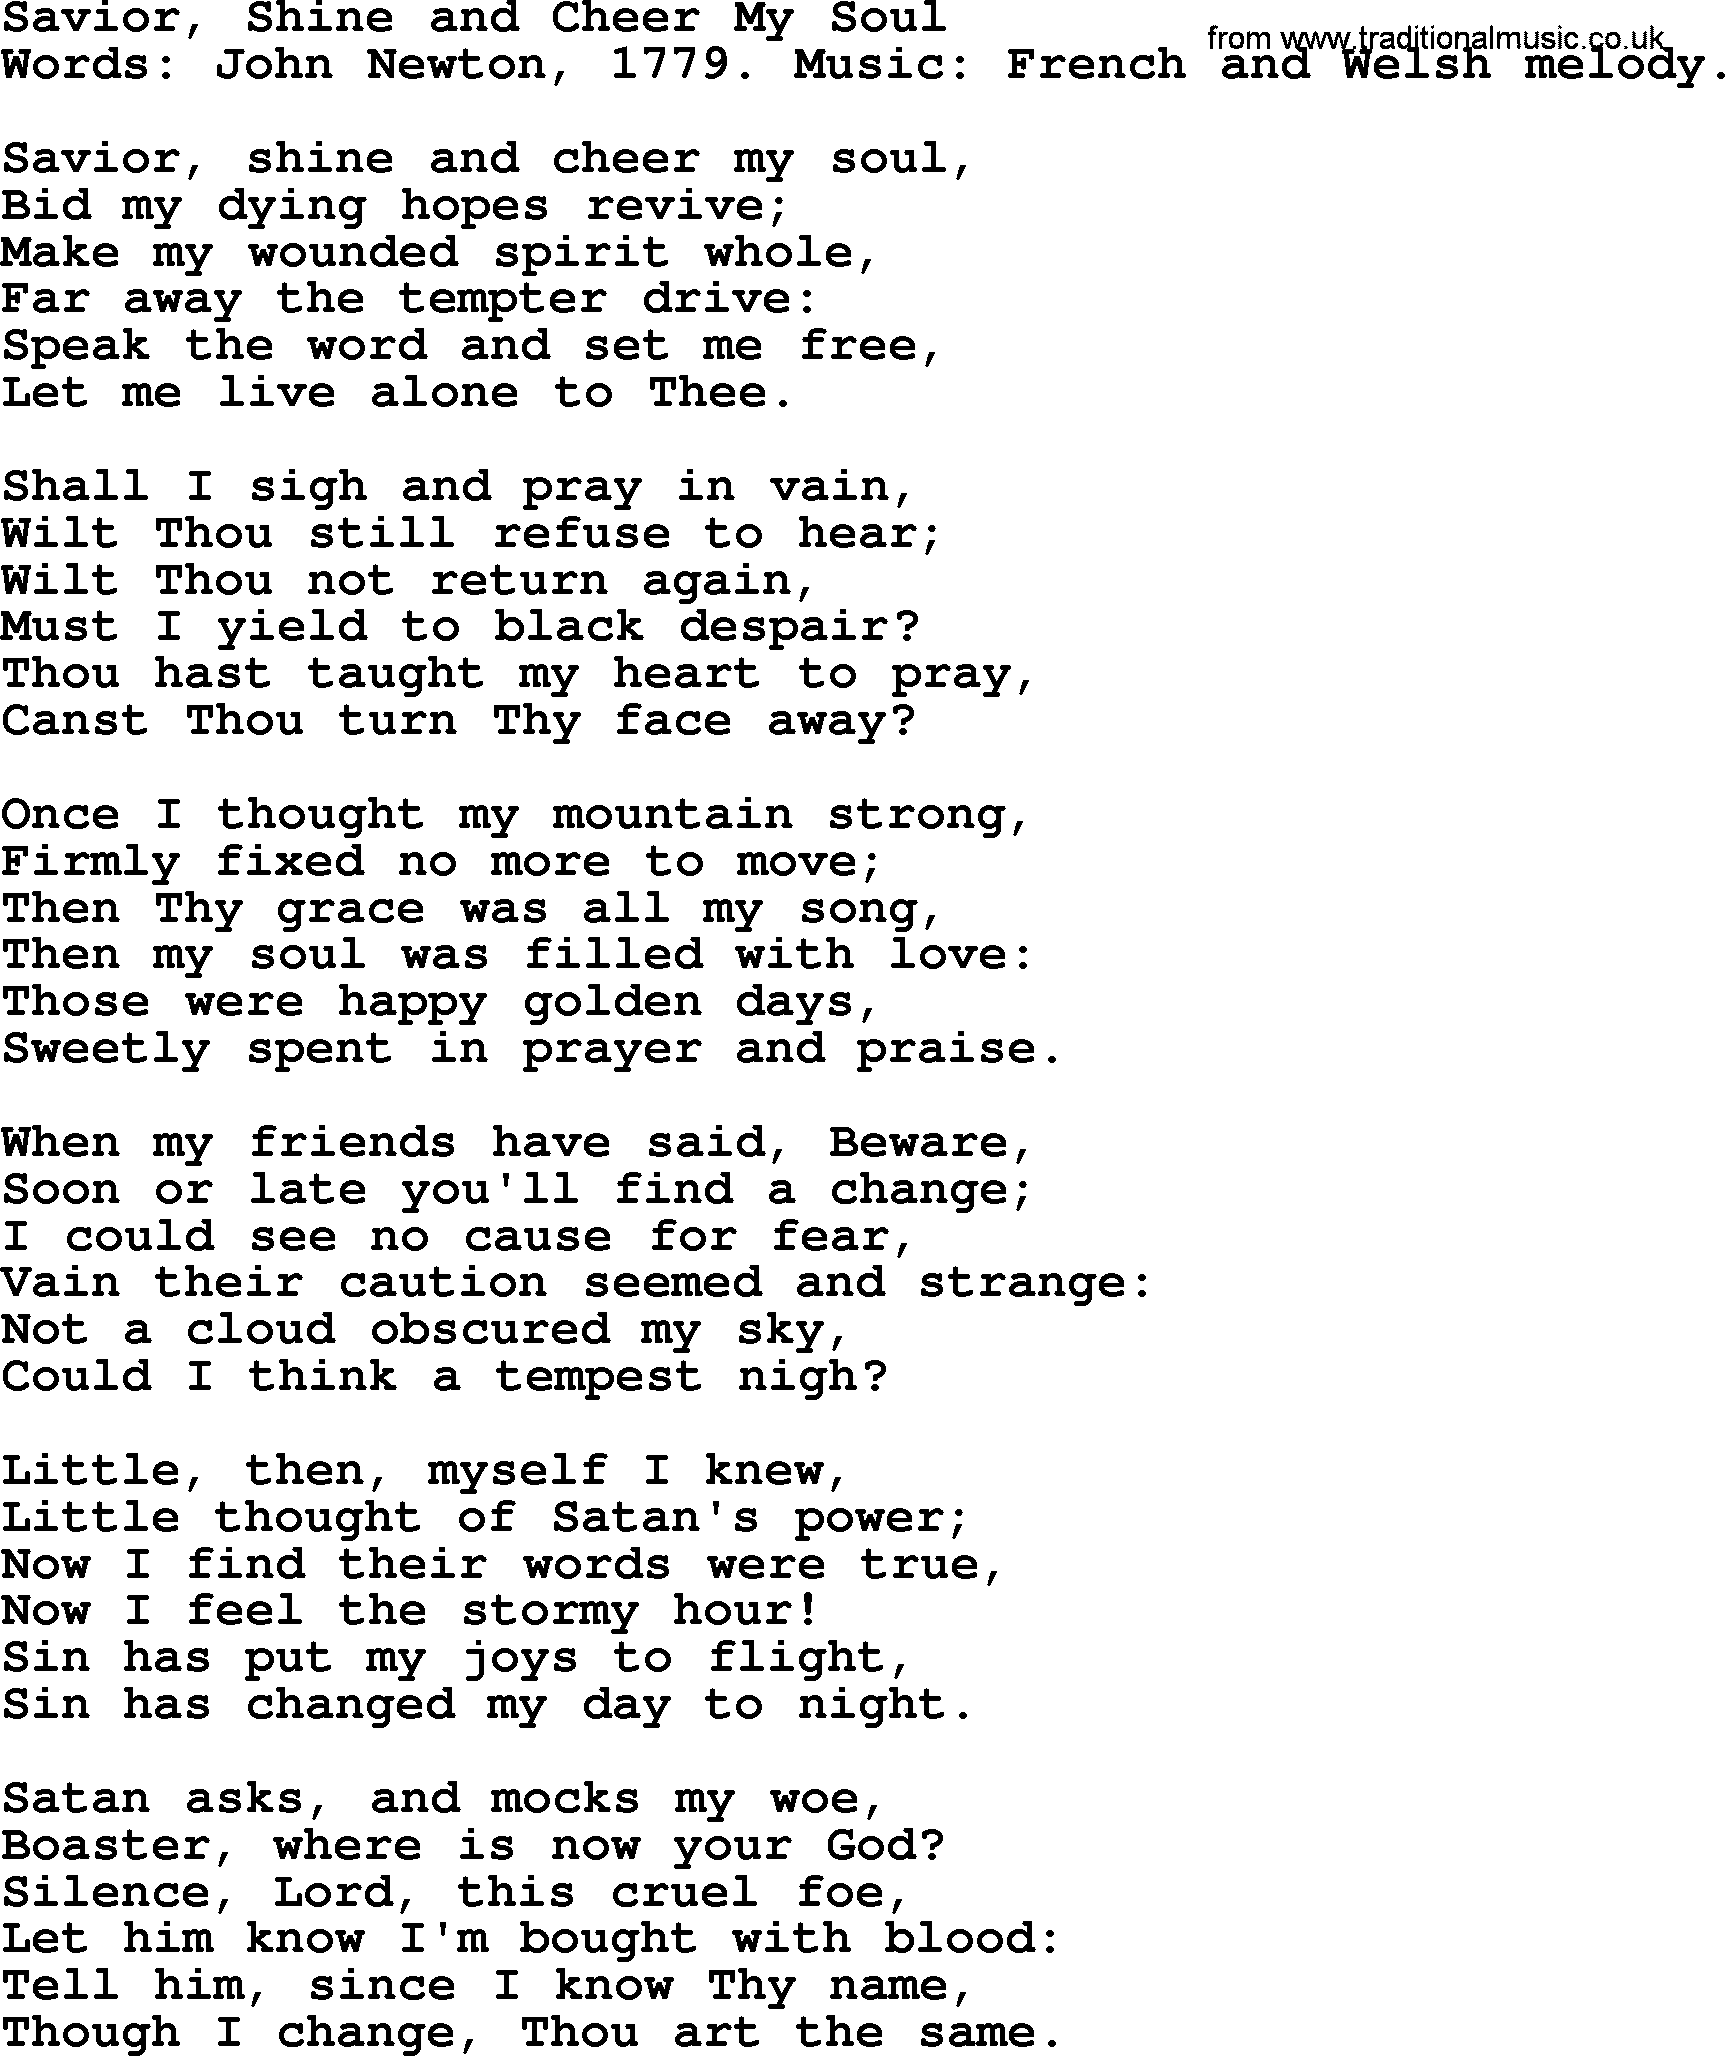 John Newton hymn: Savior, Shine And Cheer My Soul, lyrics